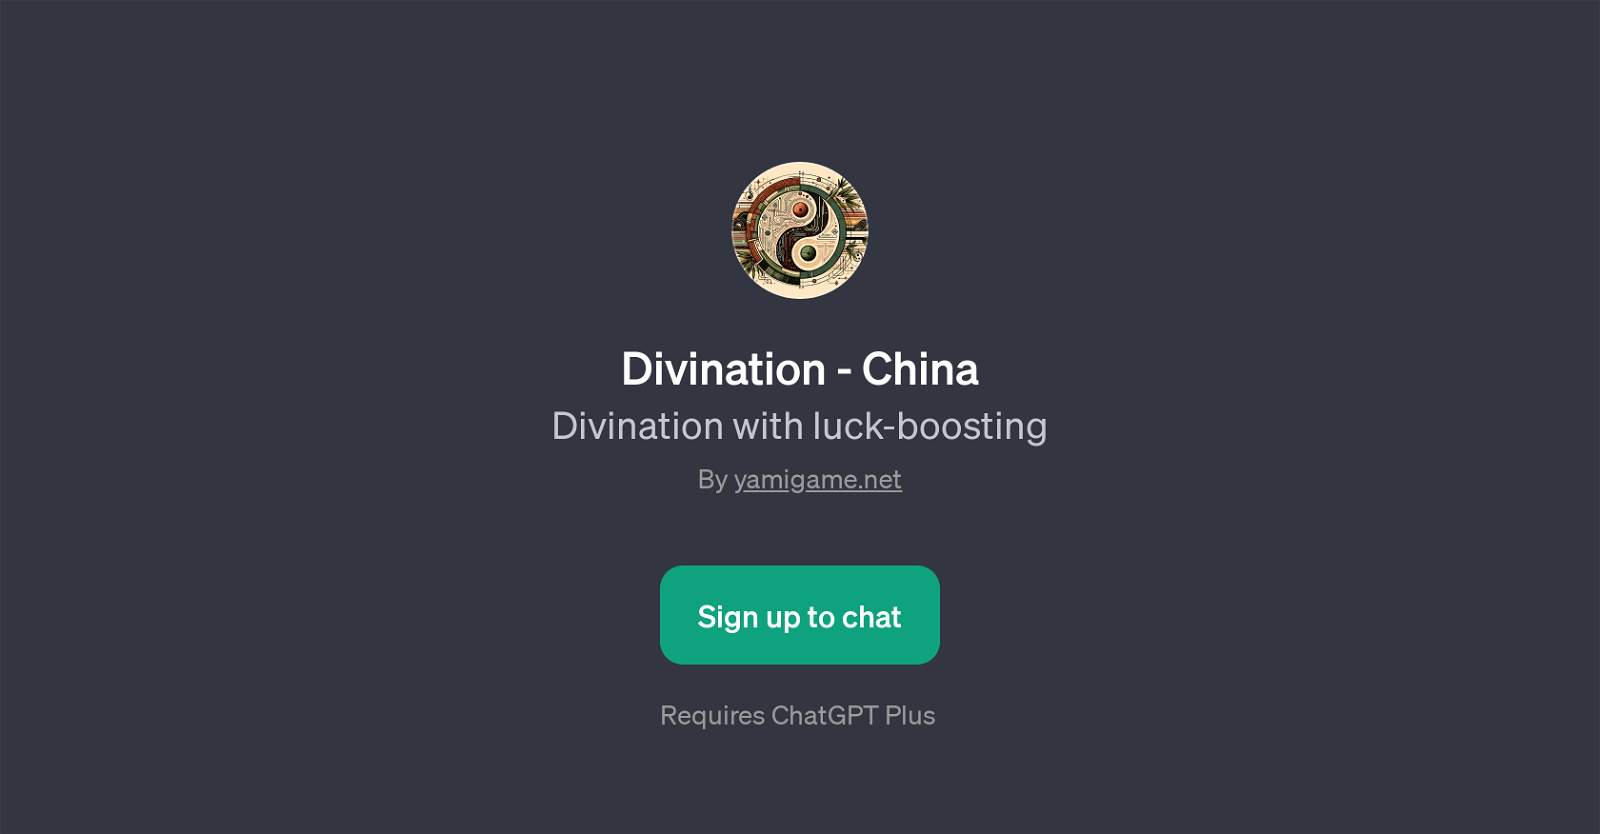 Divination - China website